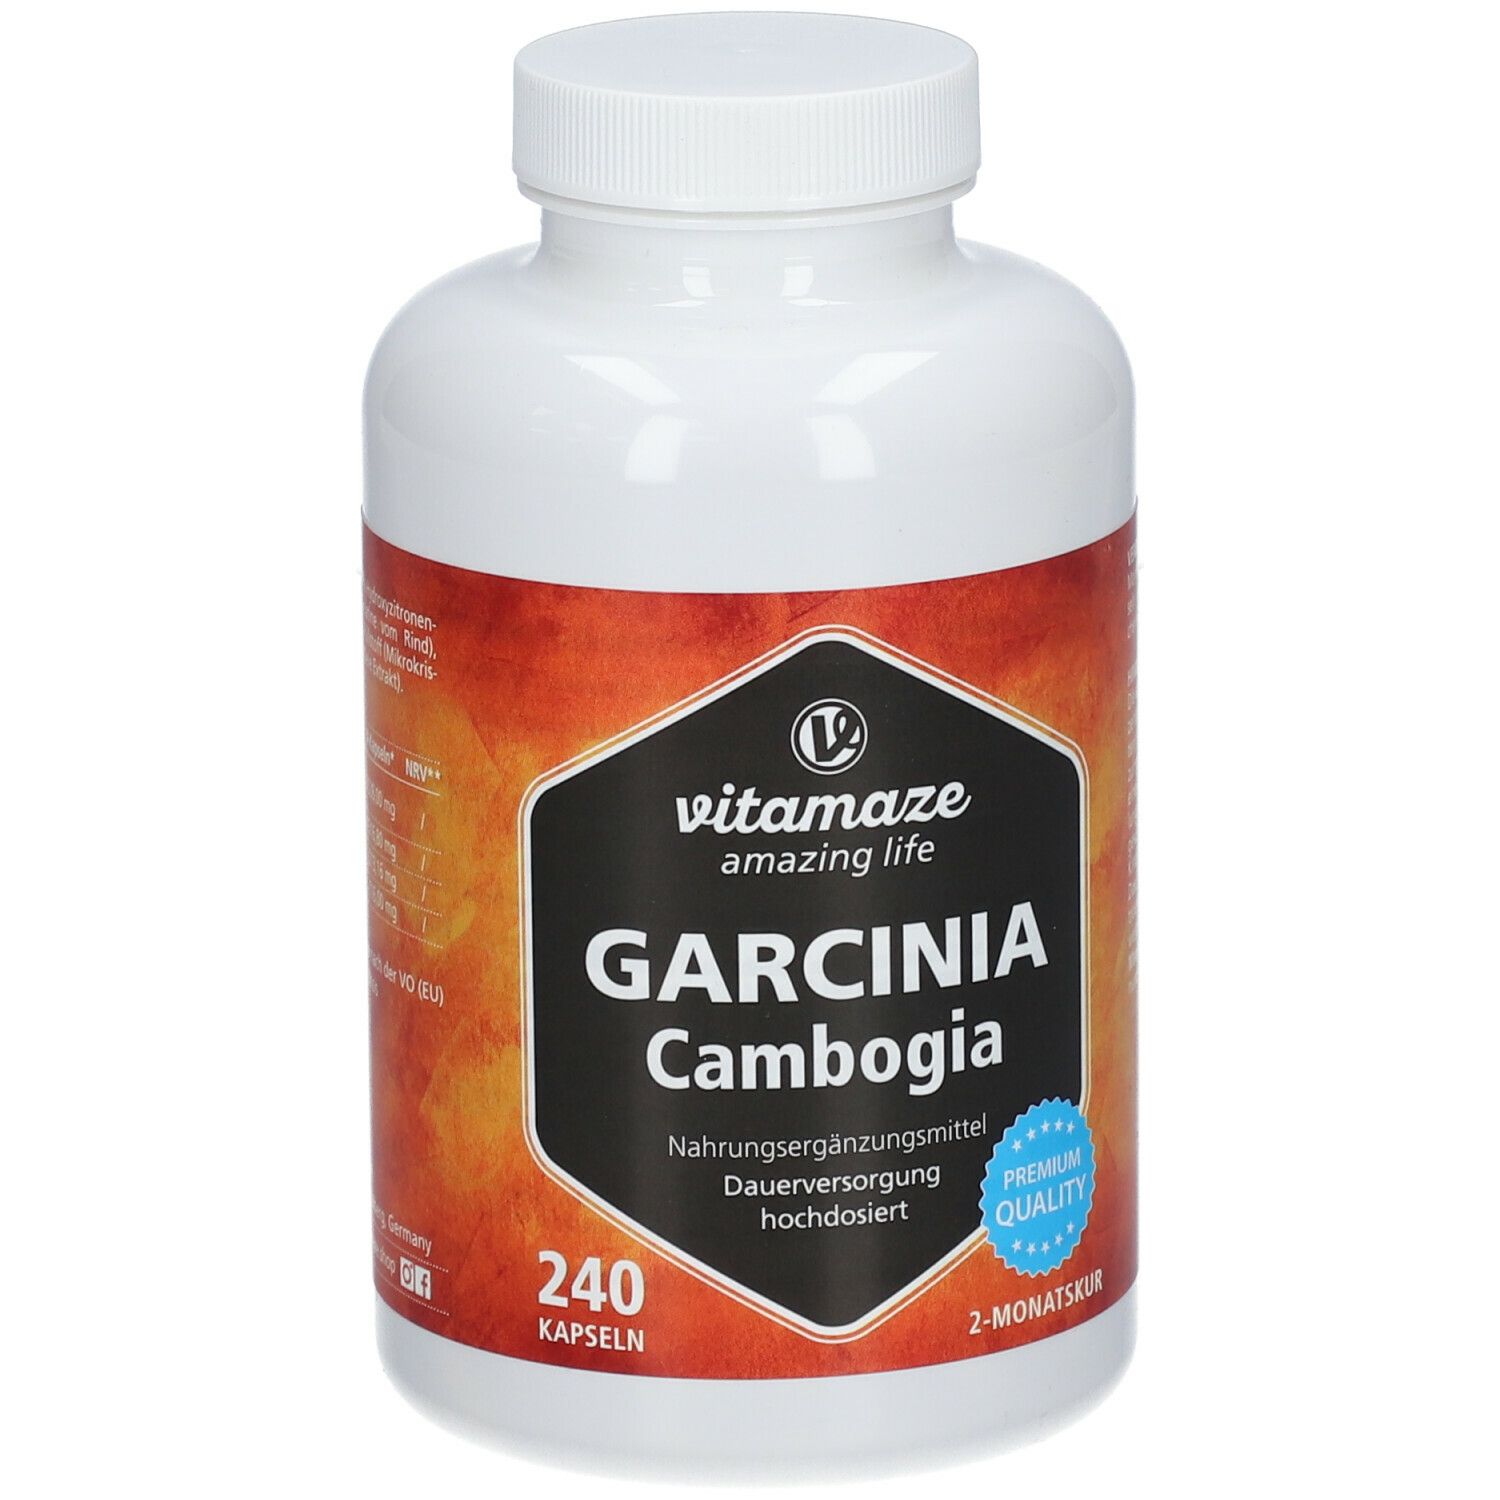 Vitamaze GARCINIA CAMBOGIA + Cholin